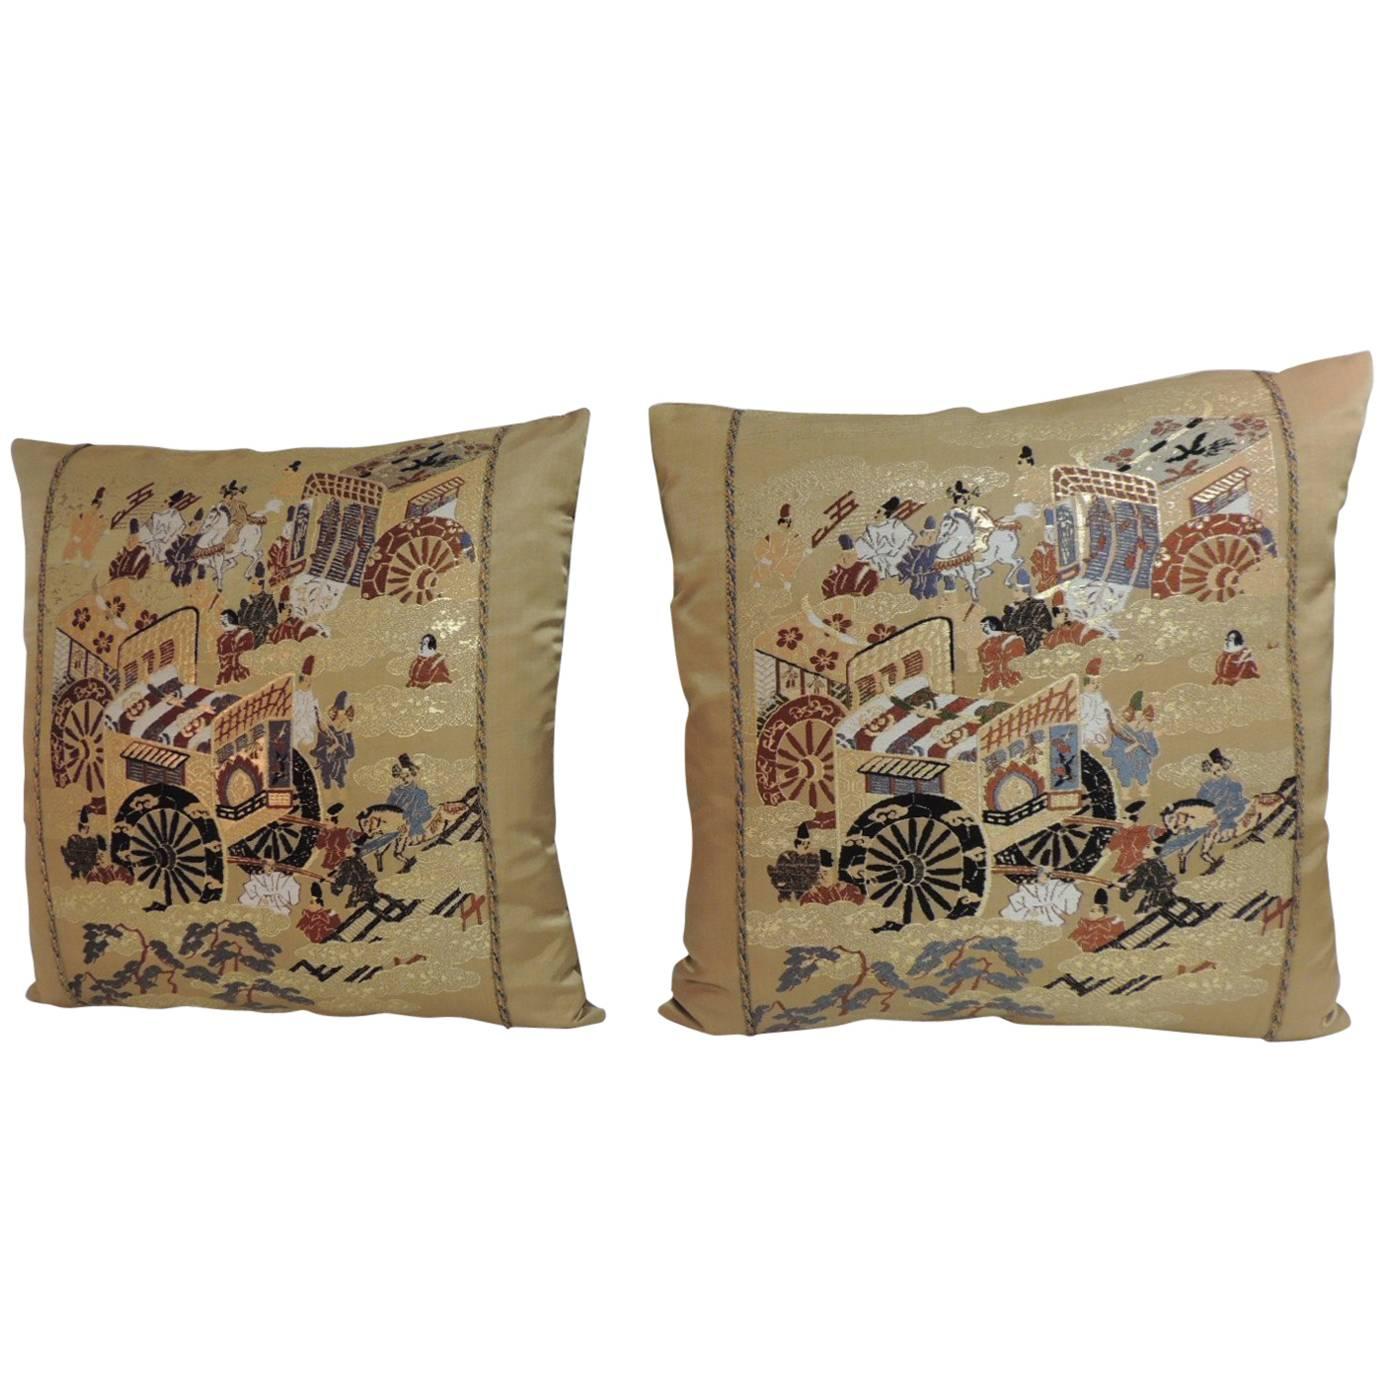 Pair of Vintage Gold Obi Woven Square Decorative Pillows